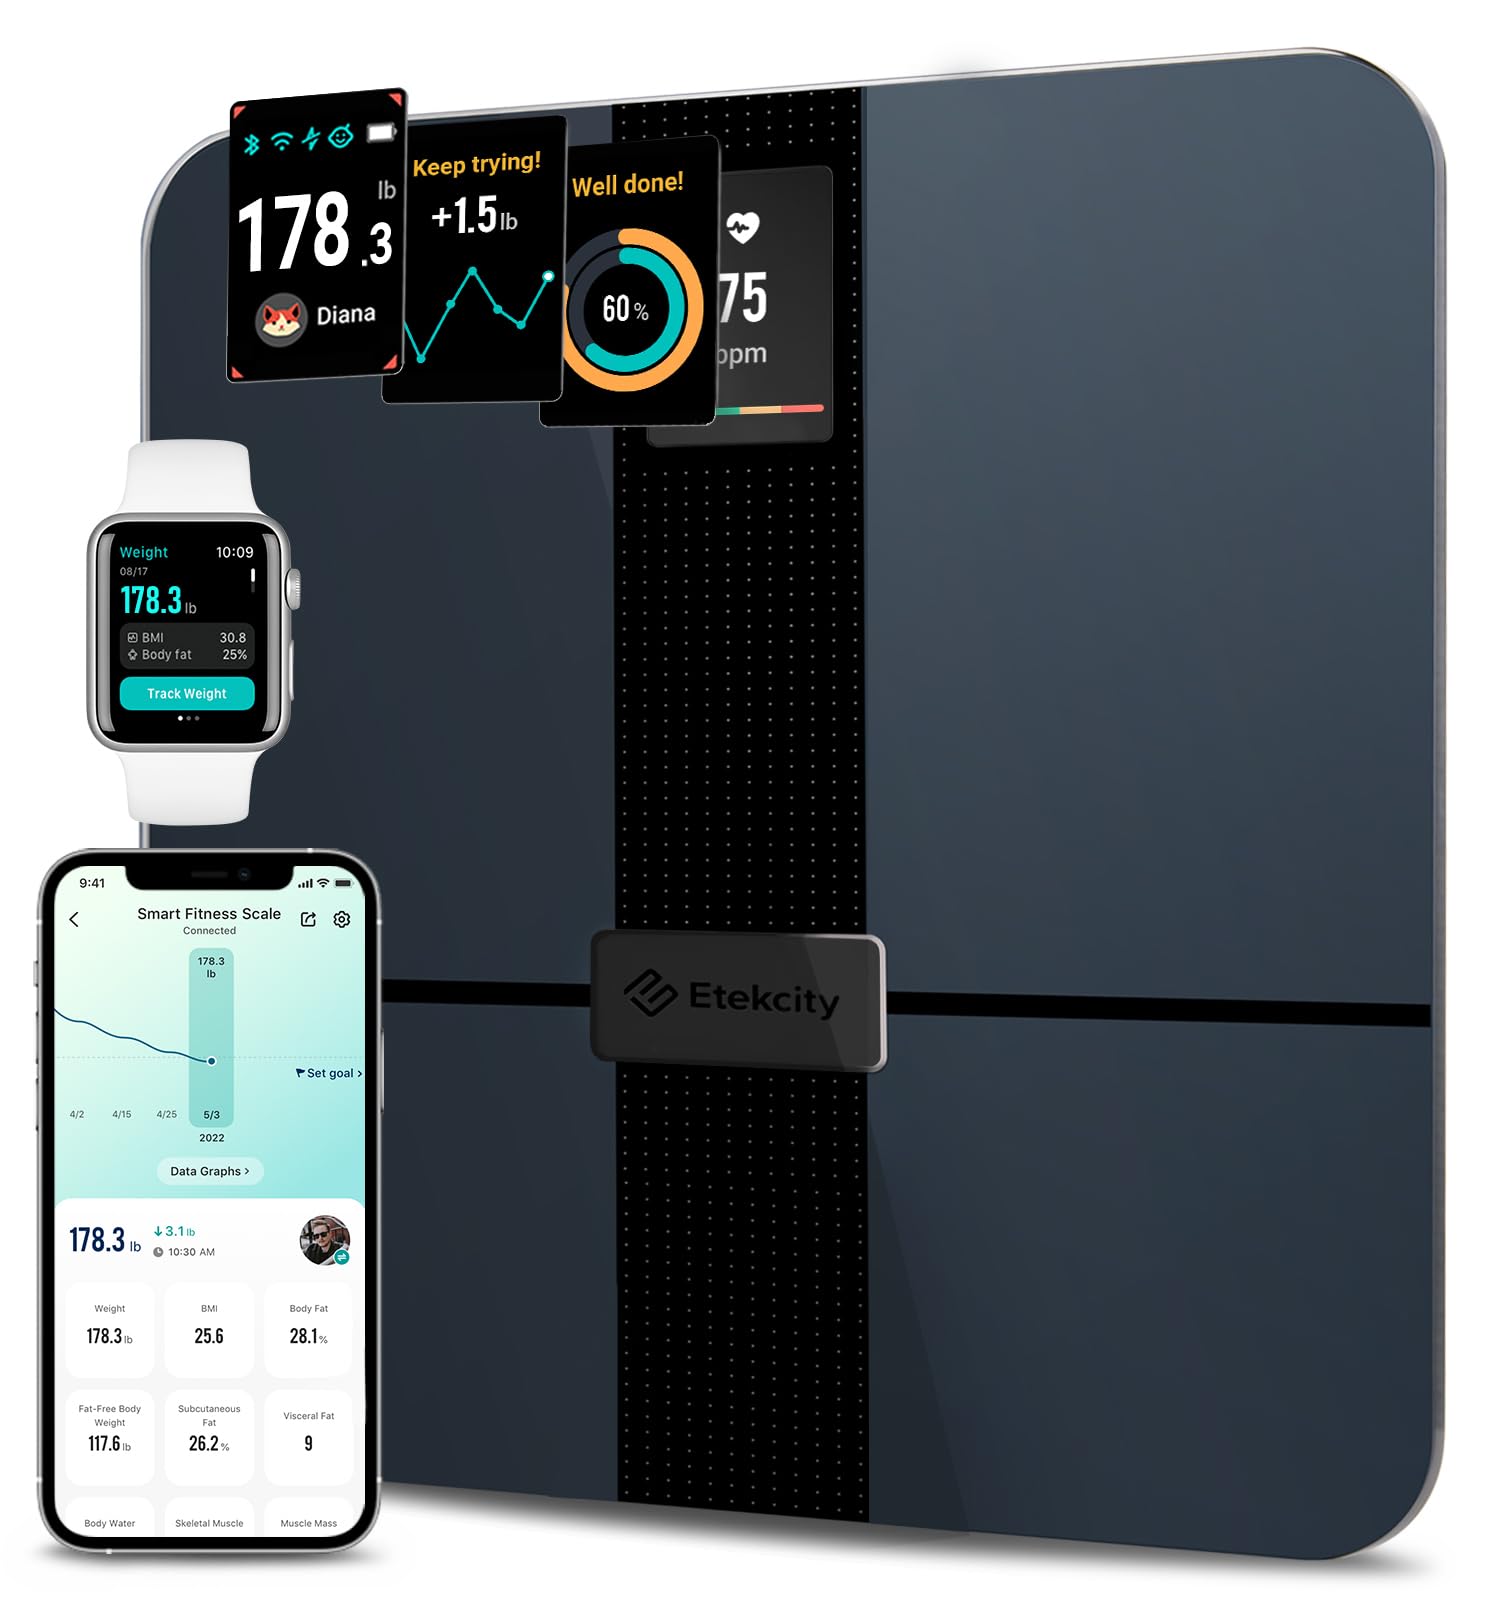 OMRON Evolv Bluetooth Wireless Upper Arm Blood Pressure Monitor & Etekcity FSA HSA Store Eligible Smart Scale for Body Weight Fat, Digital Bathroom Weighing Machine